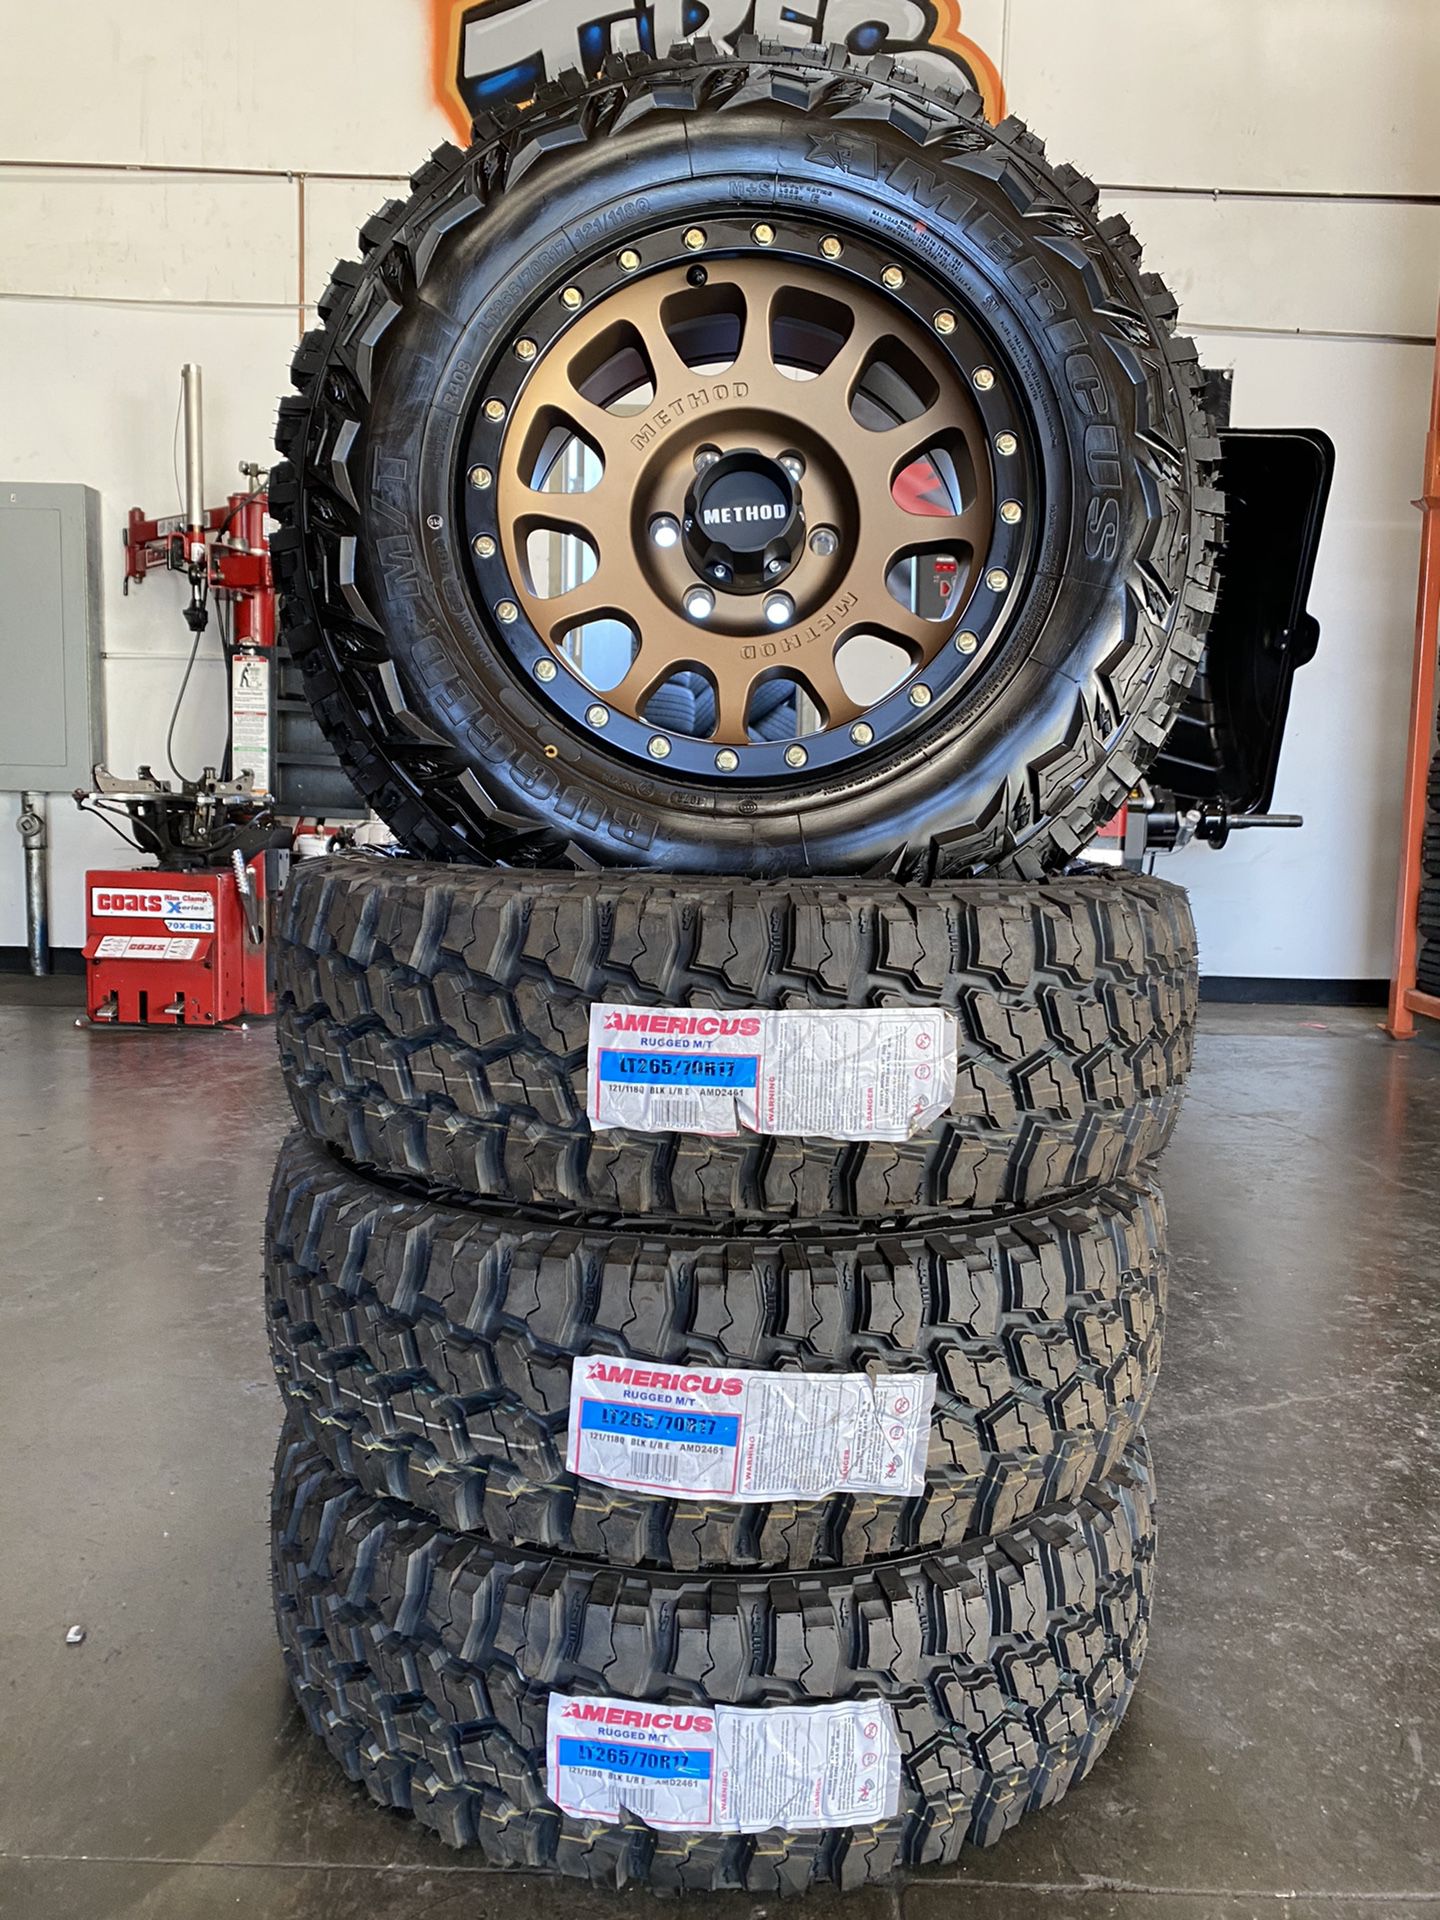 New Method 305 NV Bronze Wheels and New Mud-Terrain Tires!